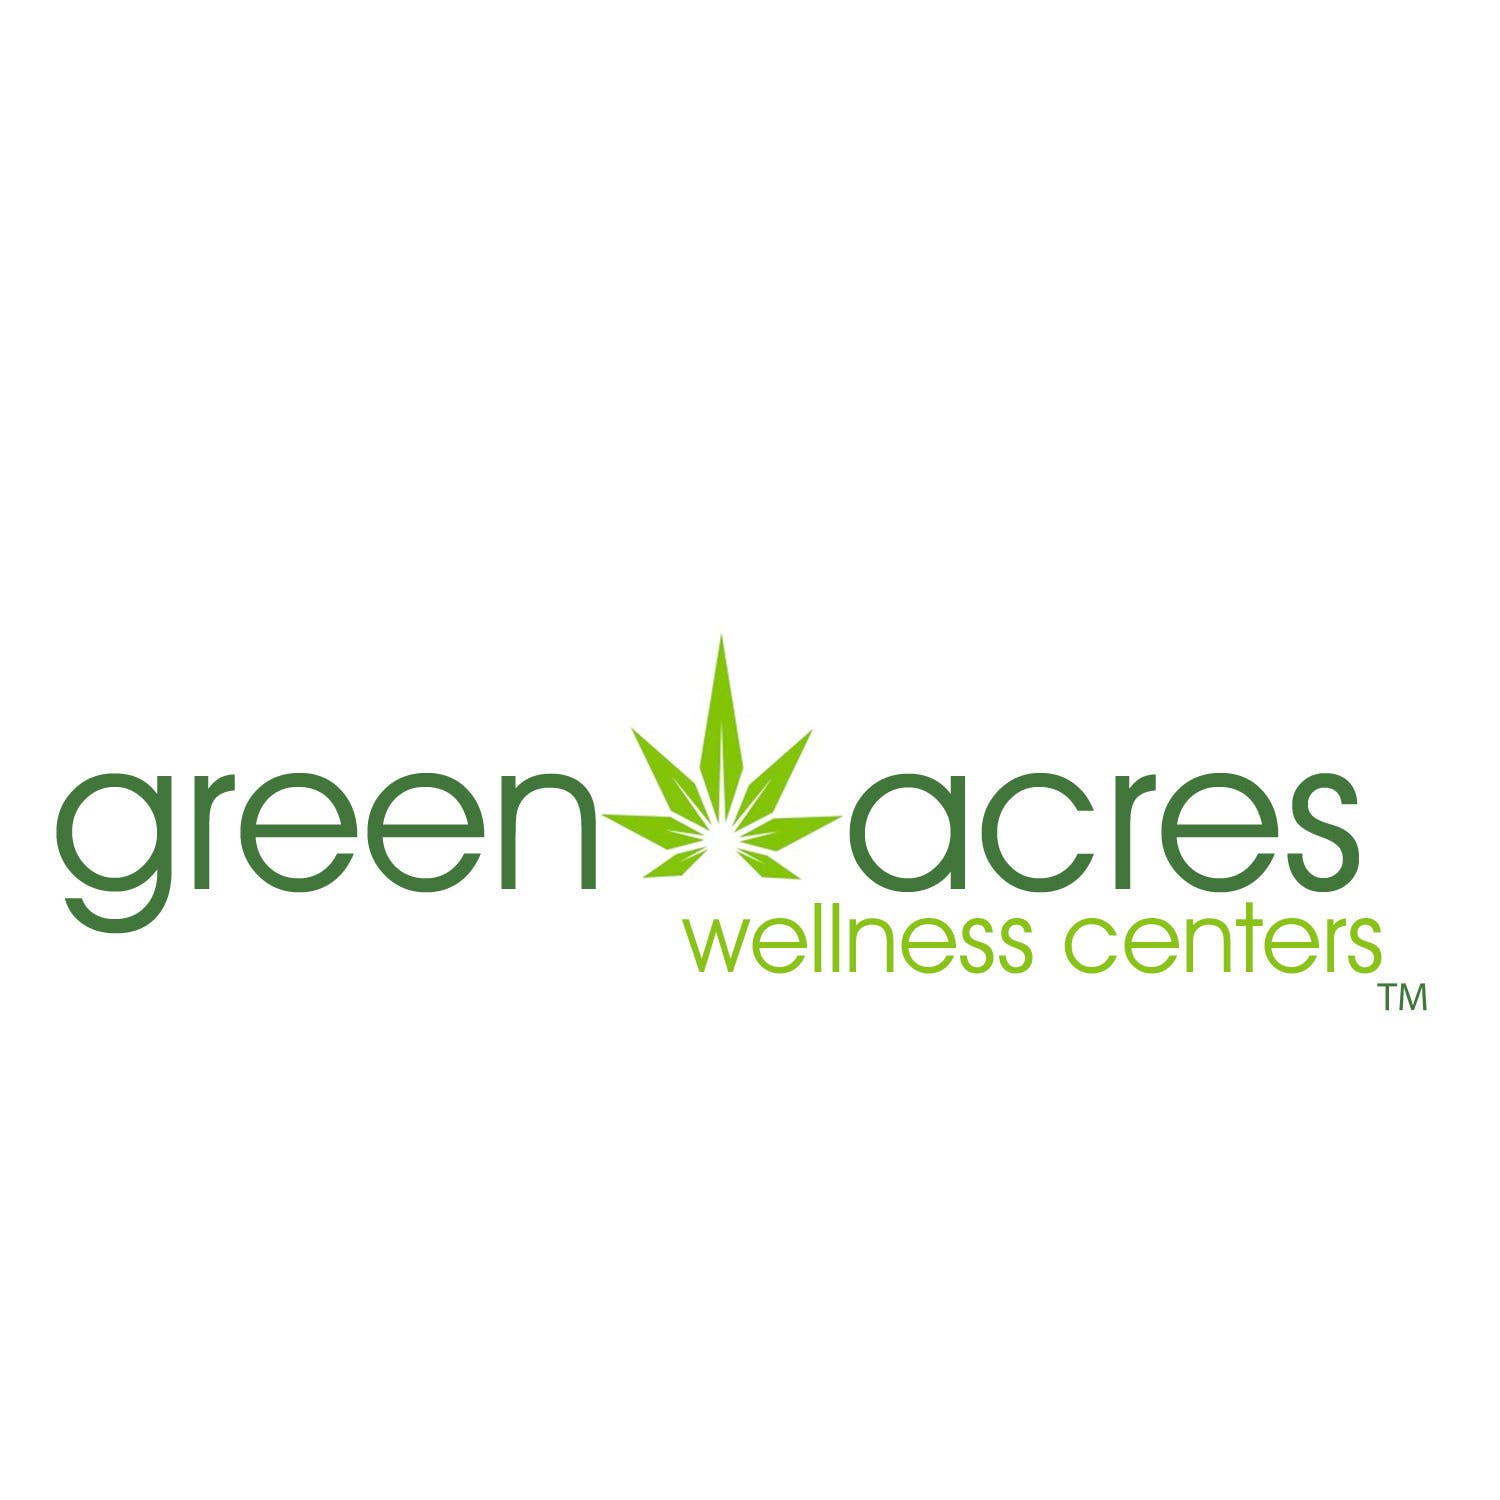 GREEN ACRES WELLNESS CENTERS - Medical Marijuana Doctors - Cannabizme.com